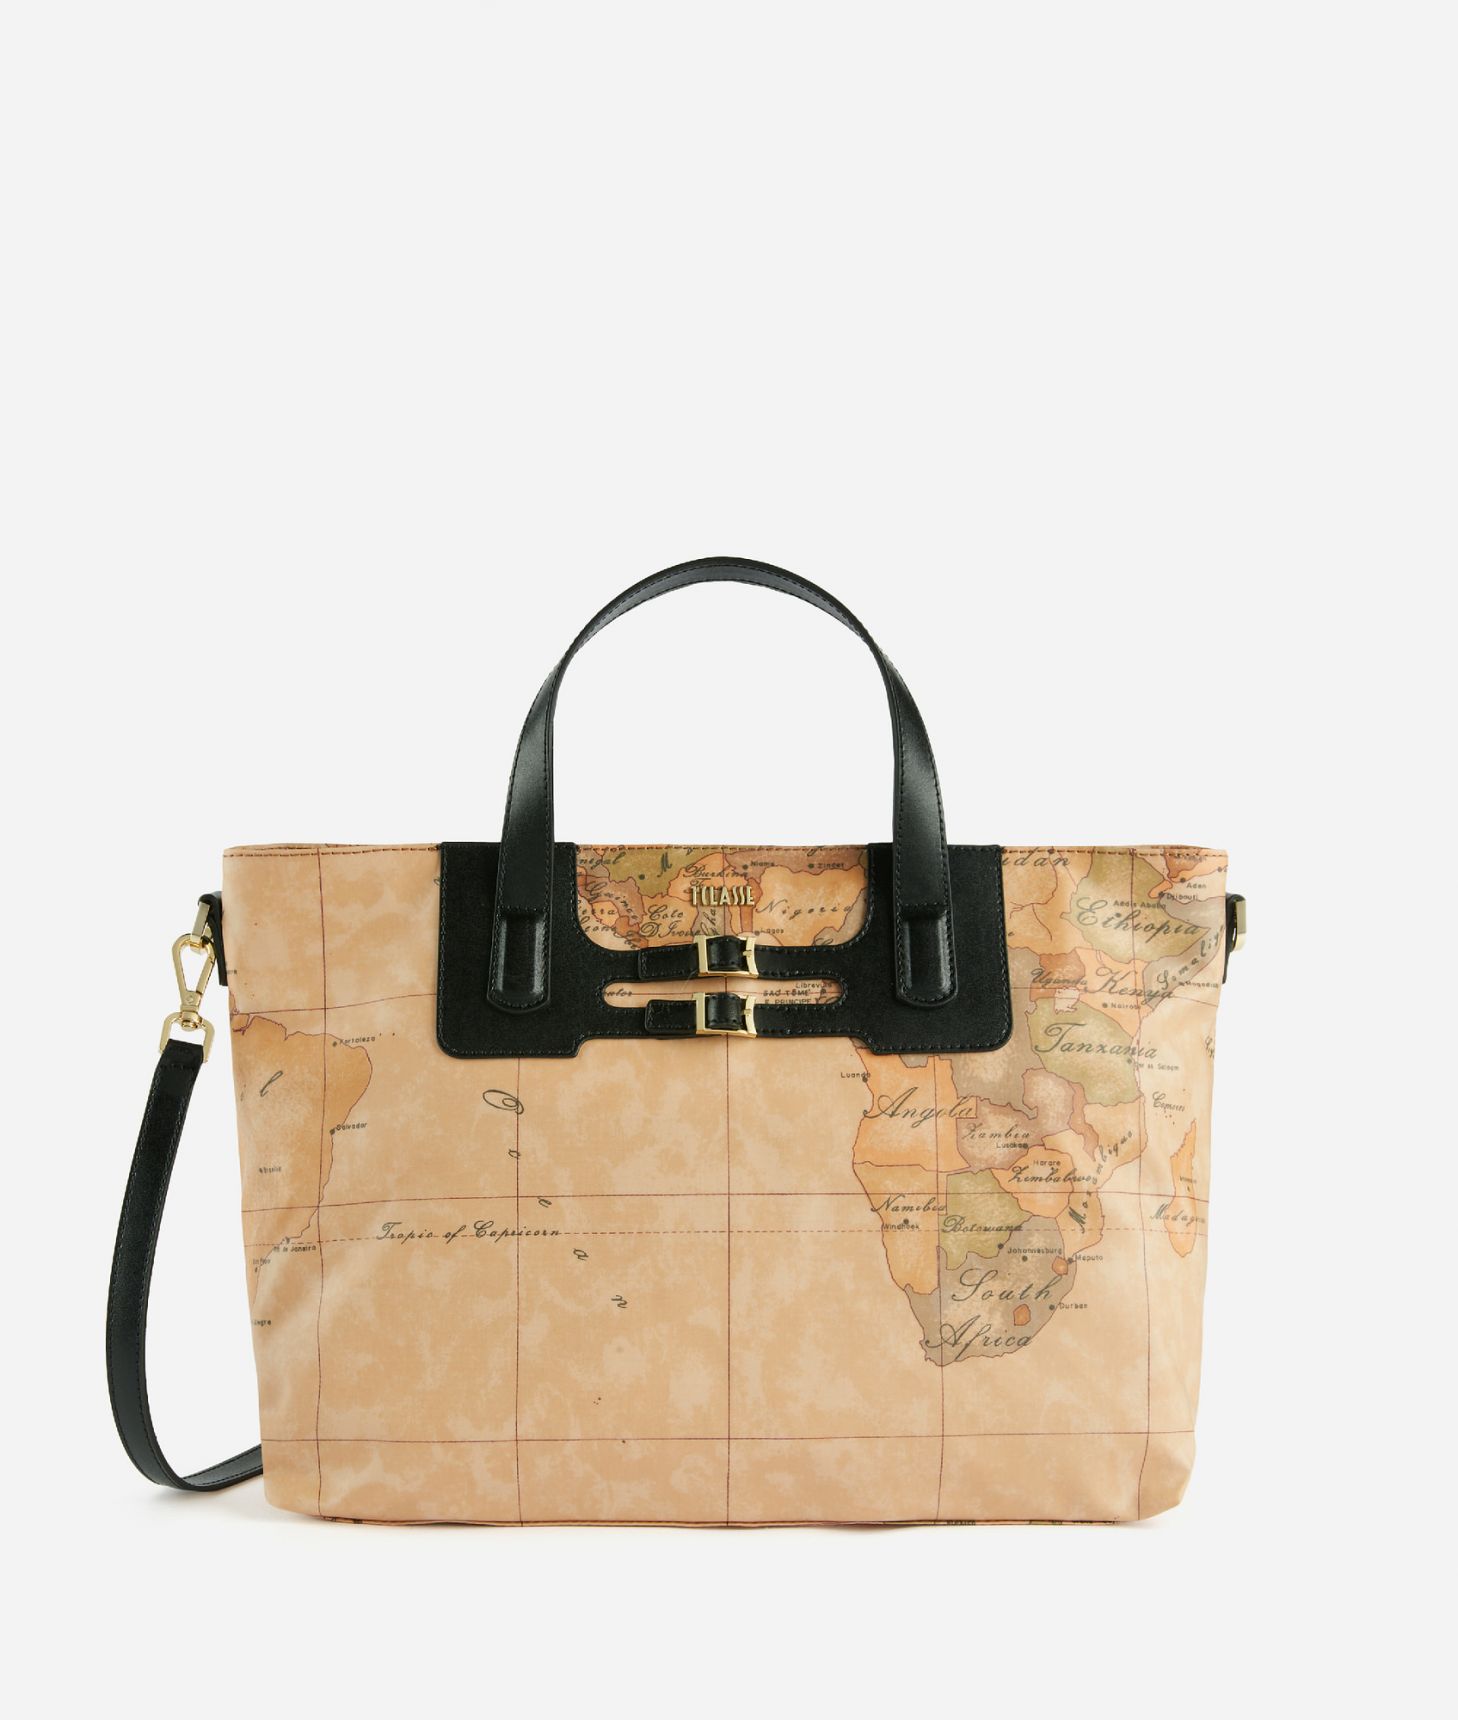 Soft Atlantic handbag with crossbody strap Black,front